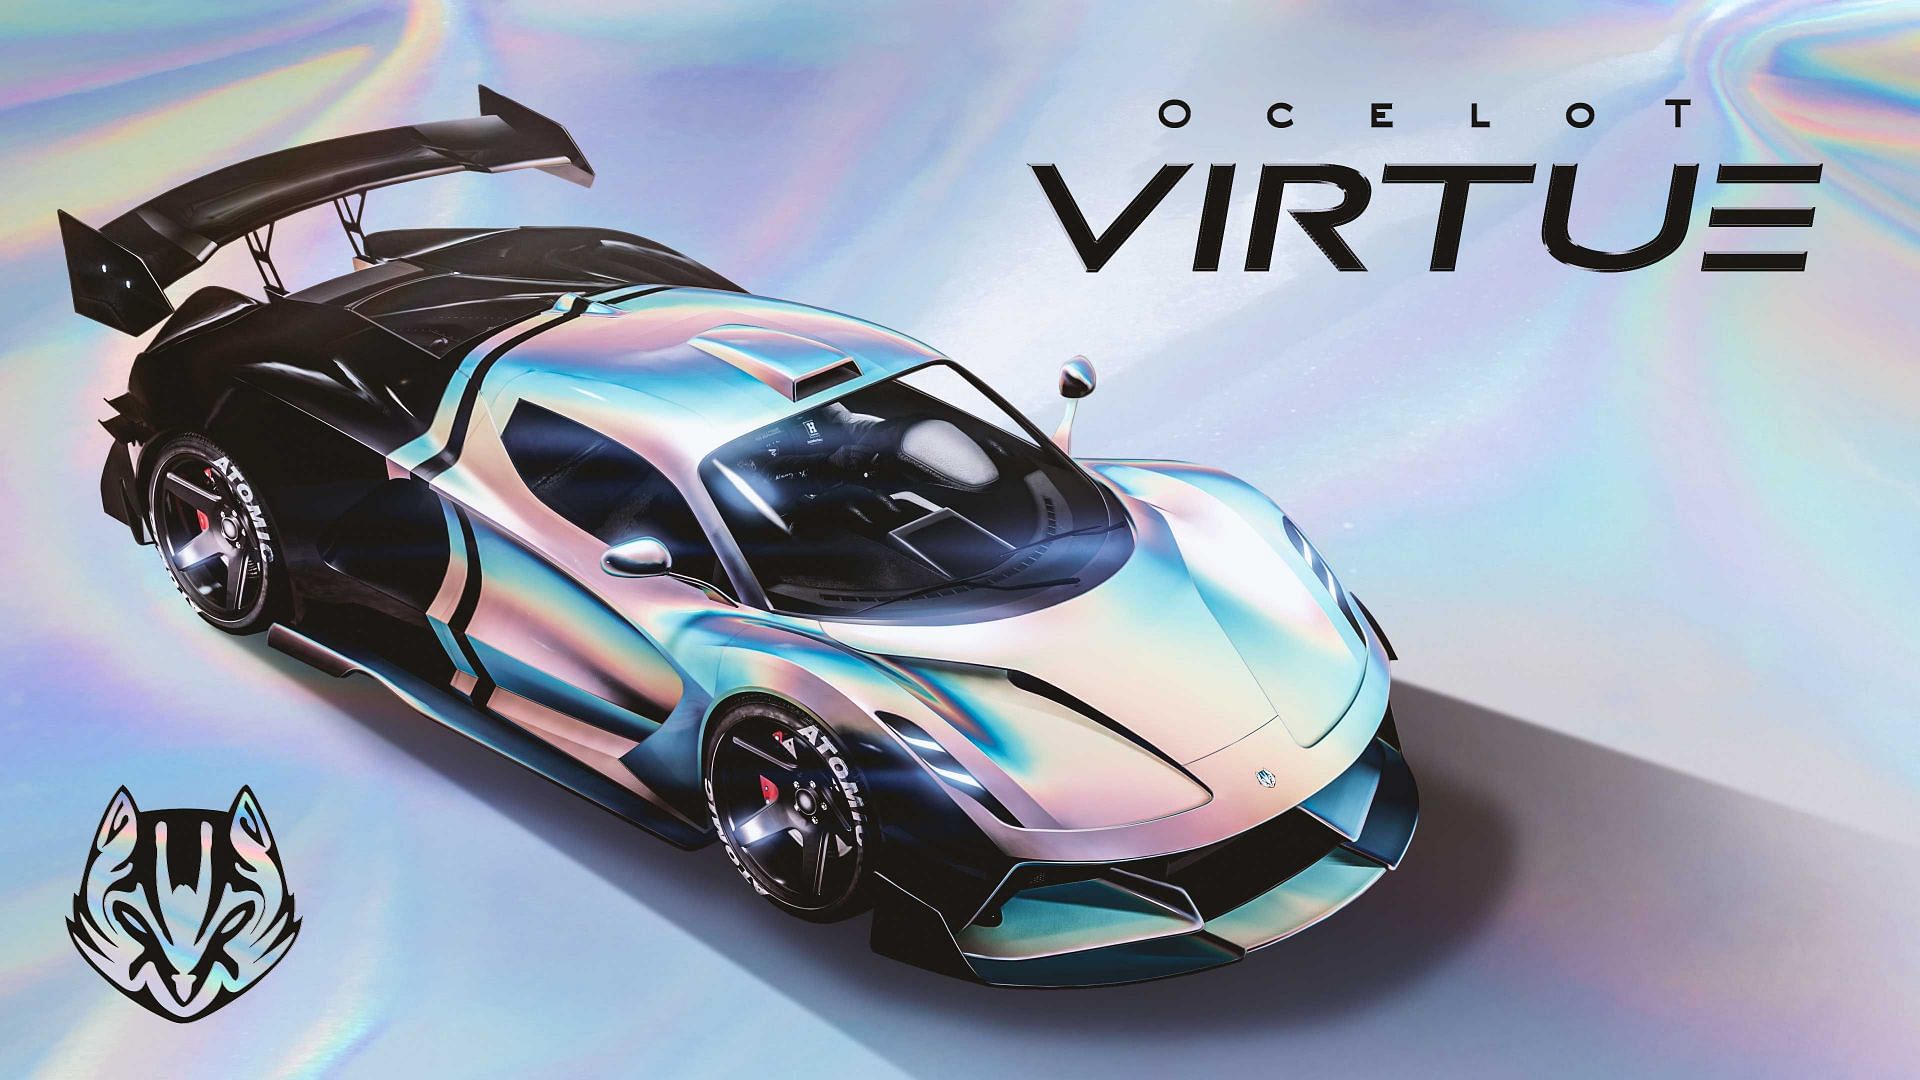 Official Ocelot Virtue poster (Image via Rockstar Games)